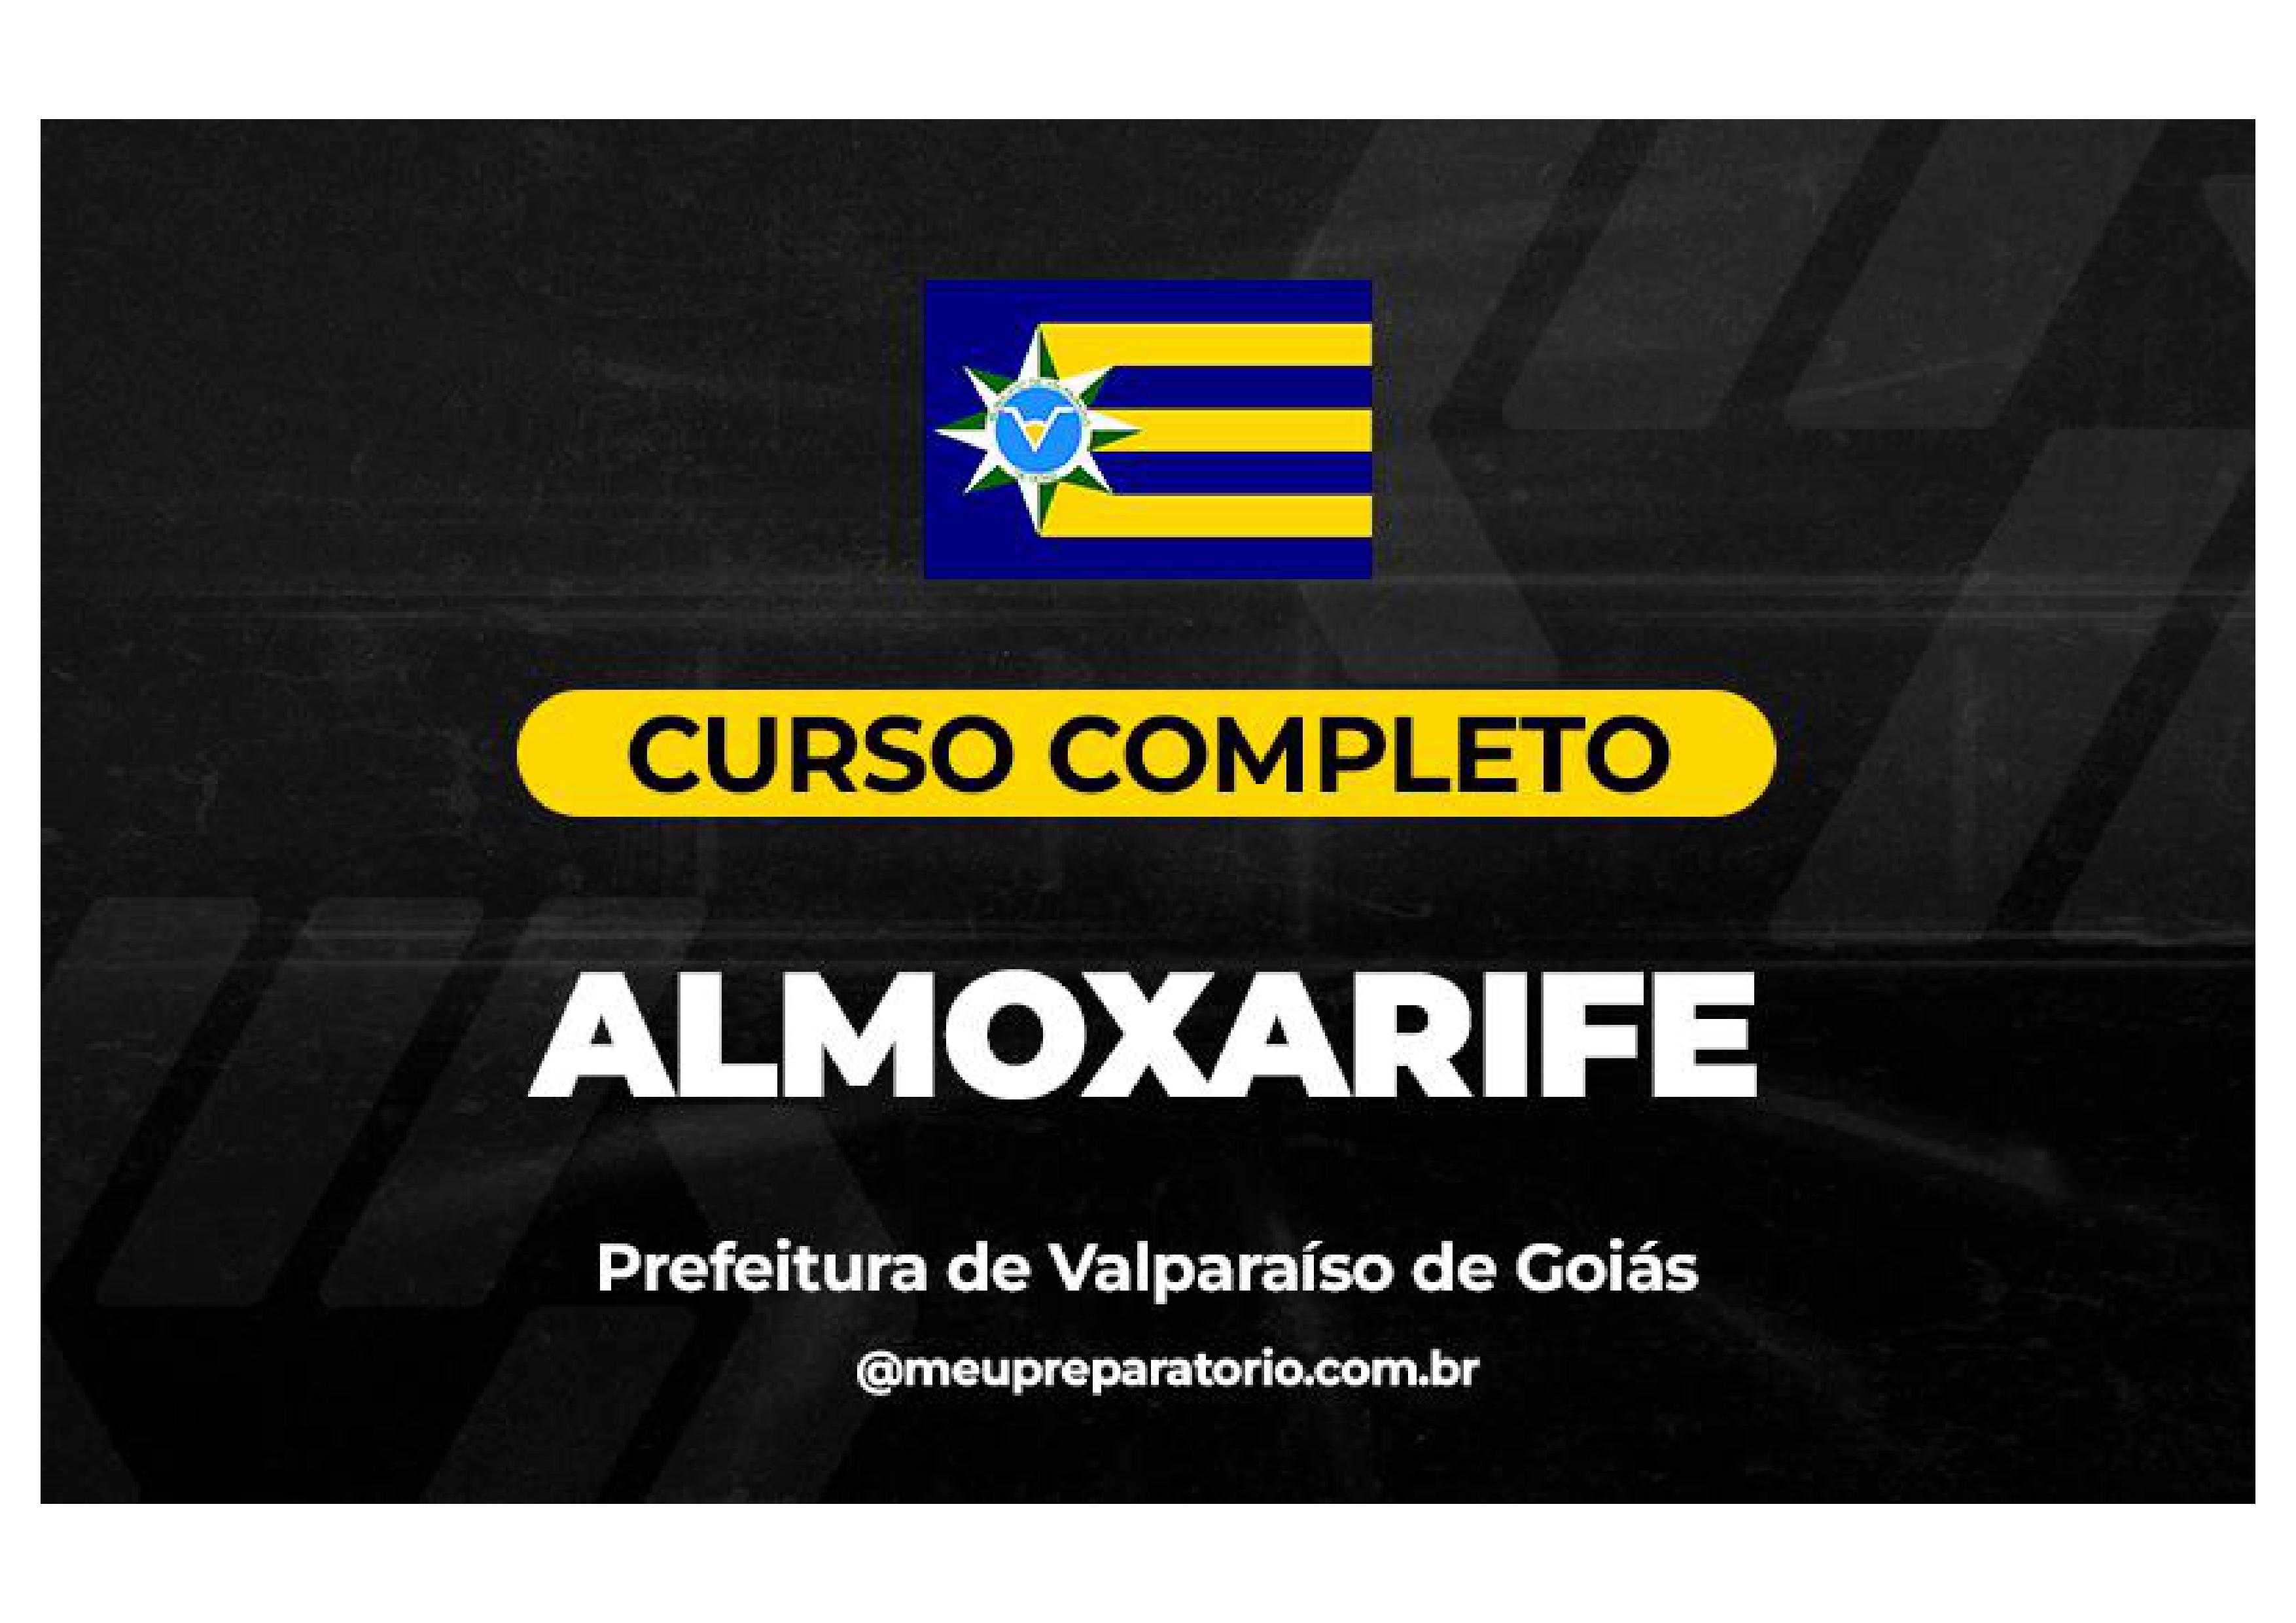 Almoxarife - Valparaíso (GO)